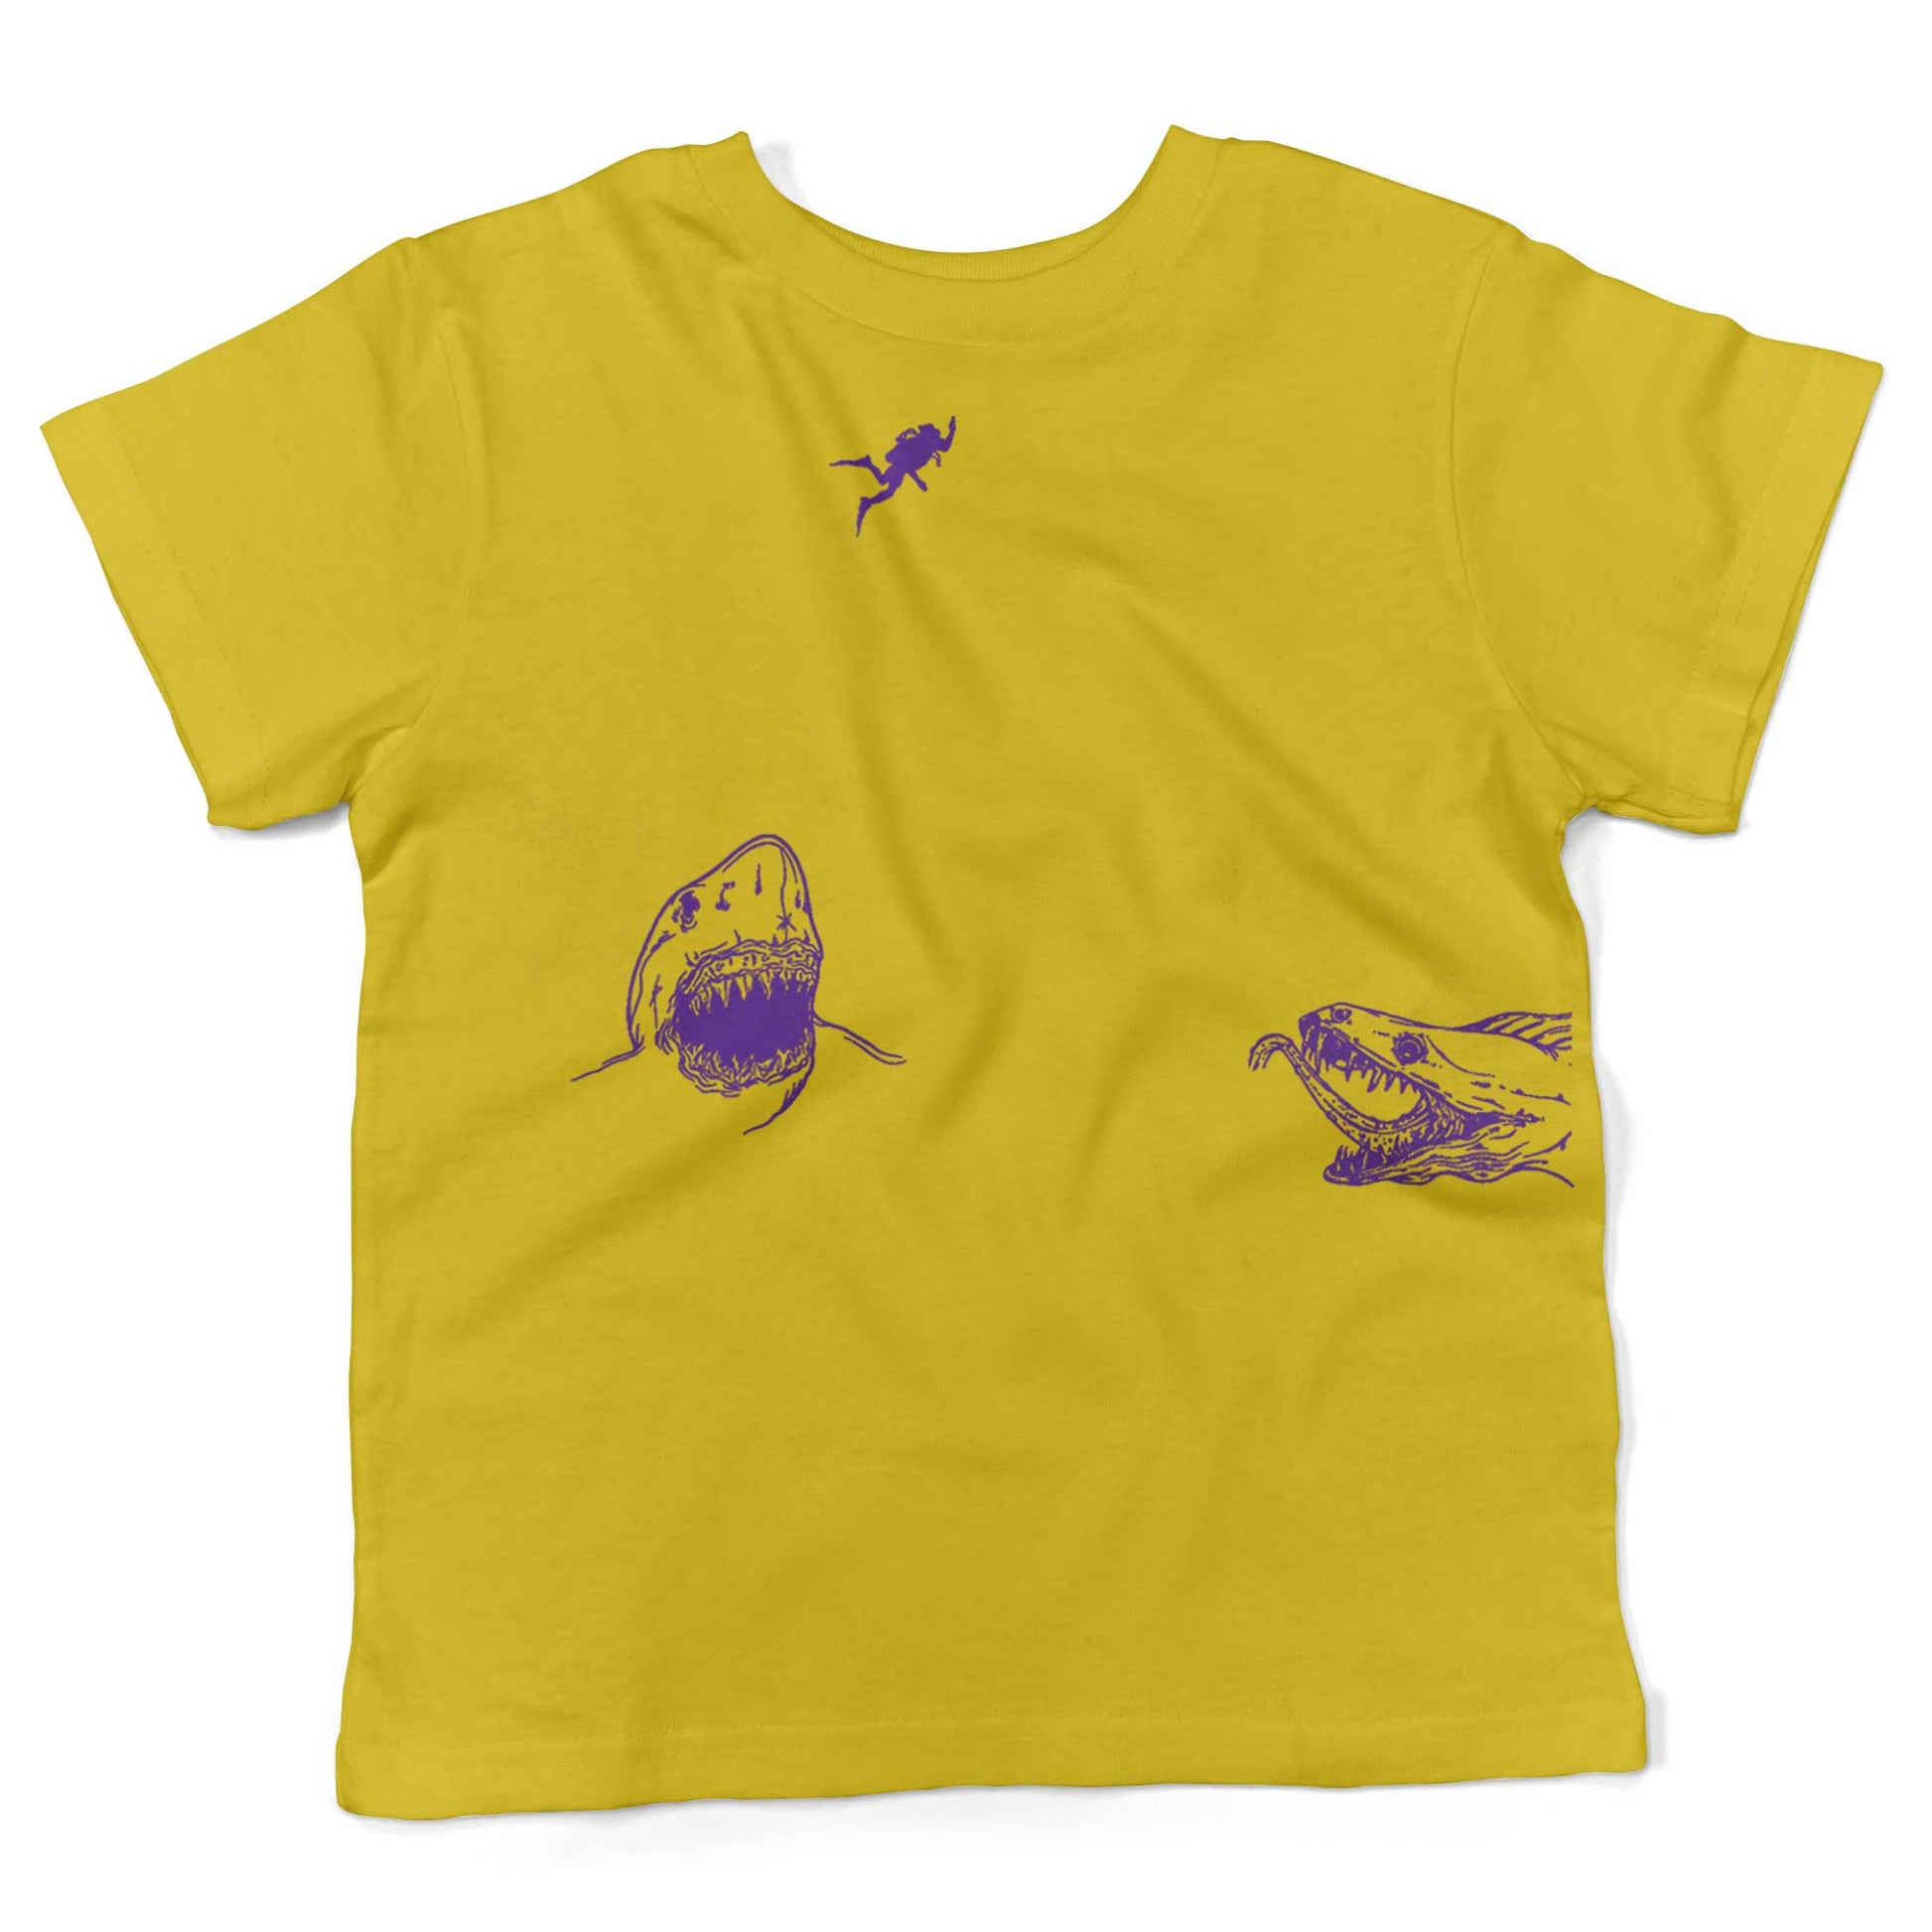 Scuba Diving Toddler Shirt-Sunshine Yellow-2T